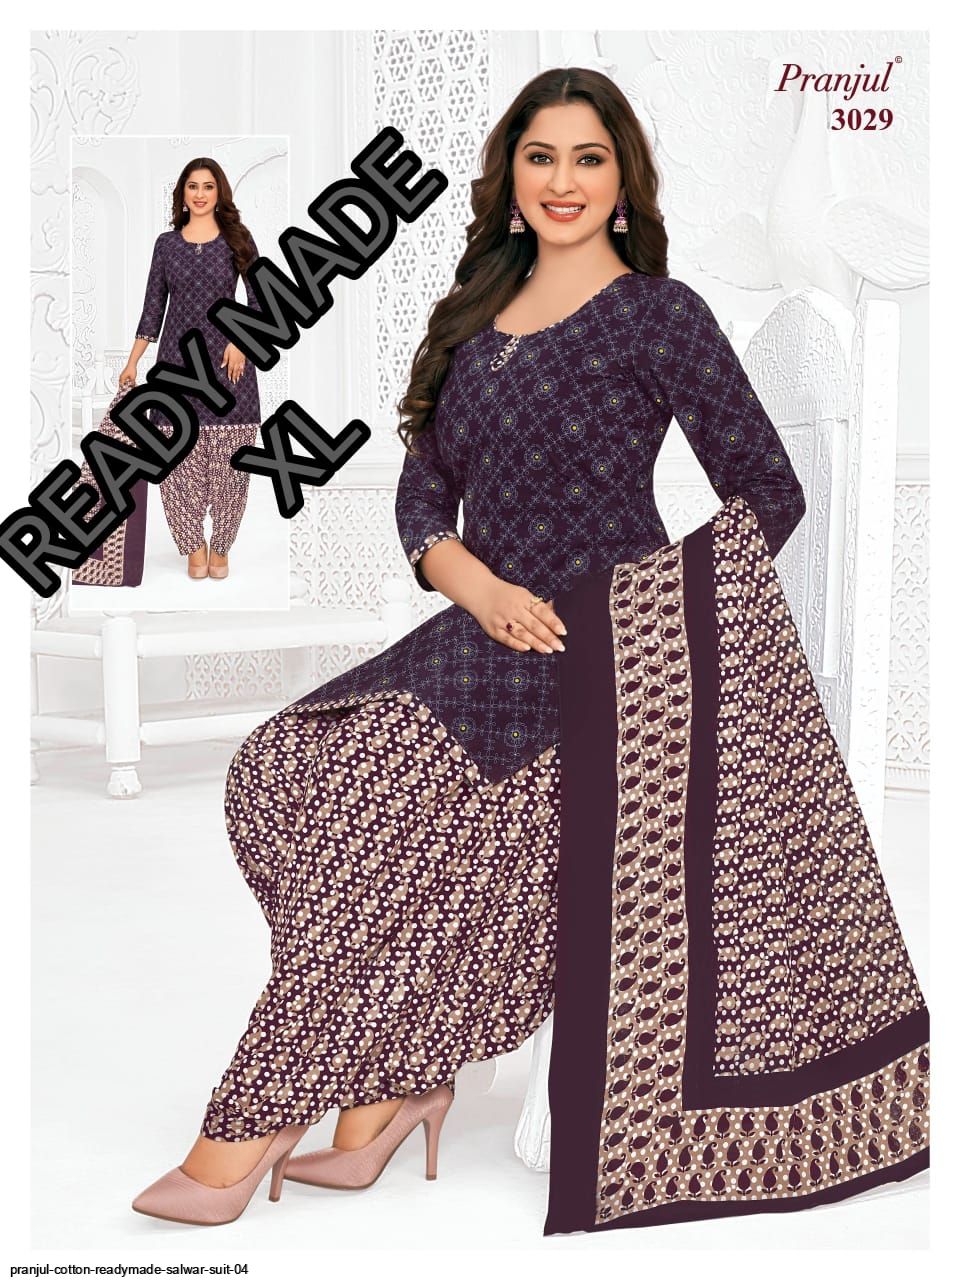 Pranjul 2638 Readymade Cotton Printed Patiyala Suit – Shopin Di Apparels